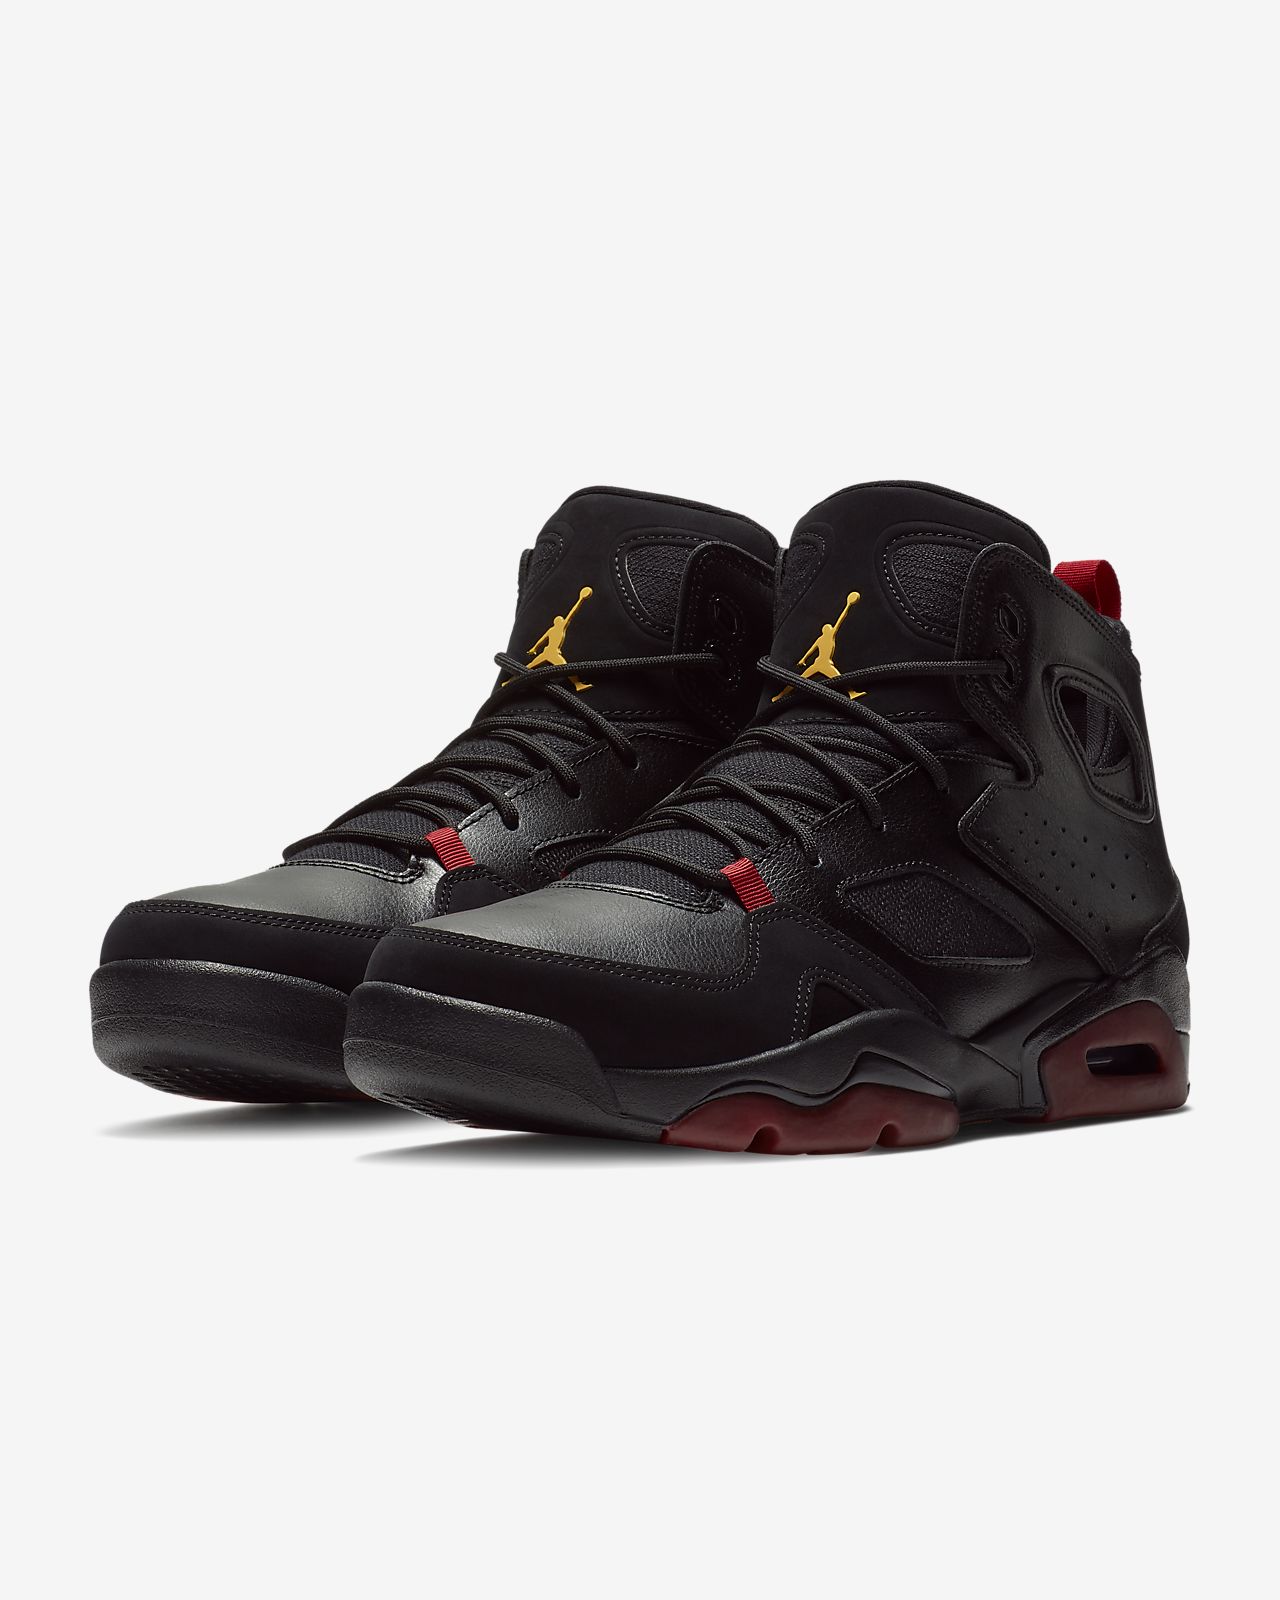 Mens Air Jordan 13 New Combination Black shoes